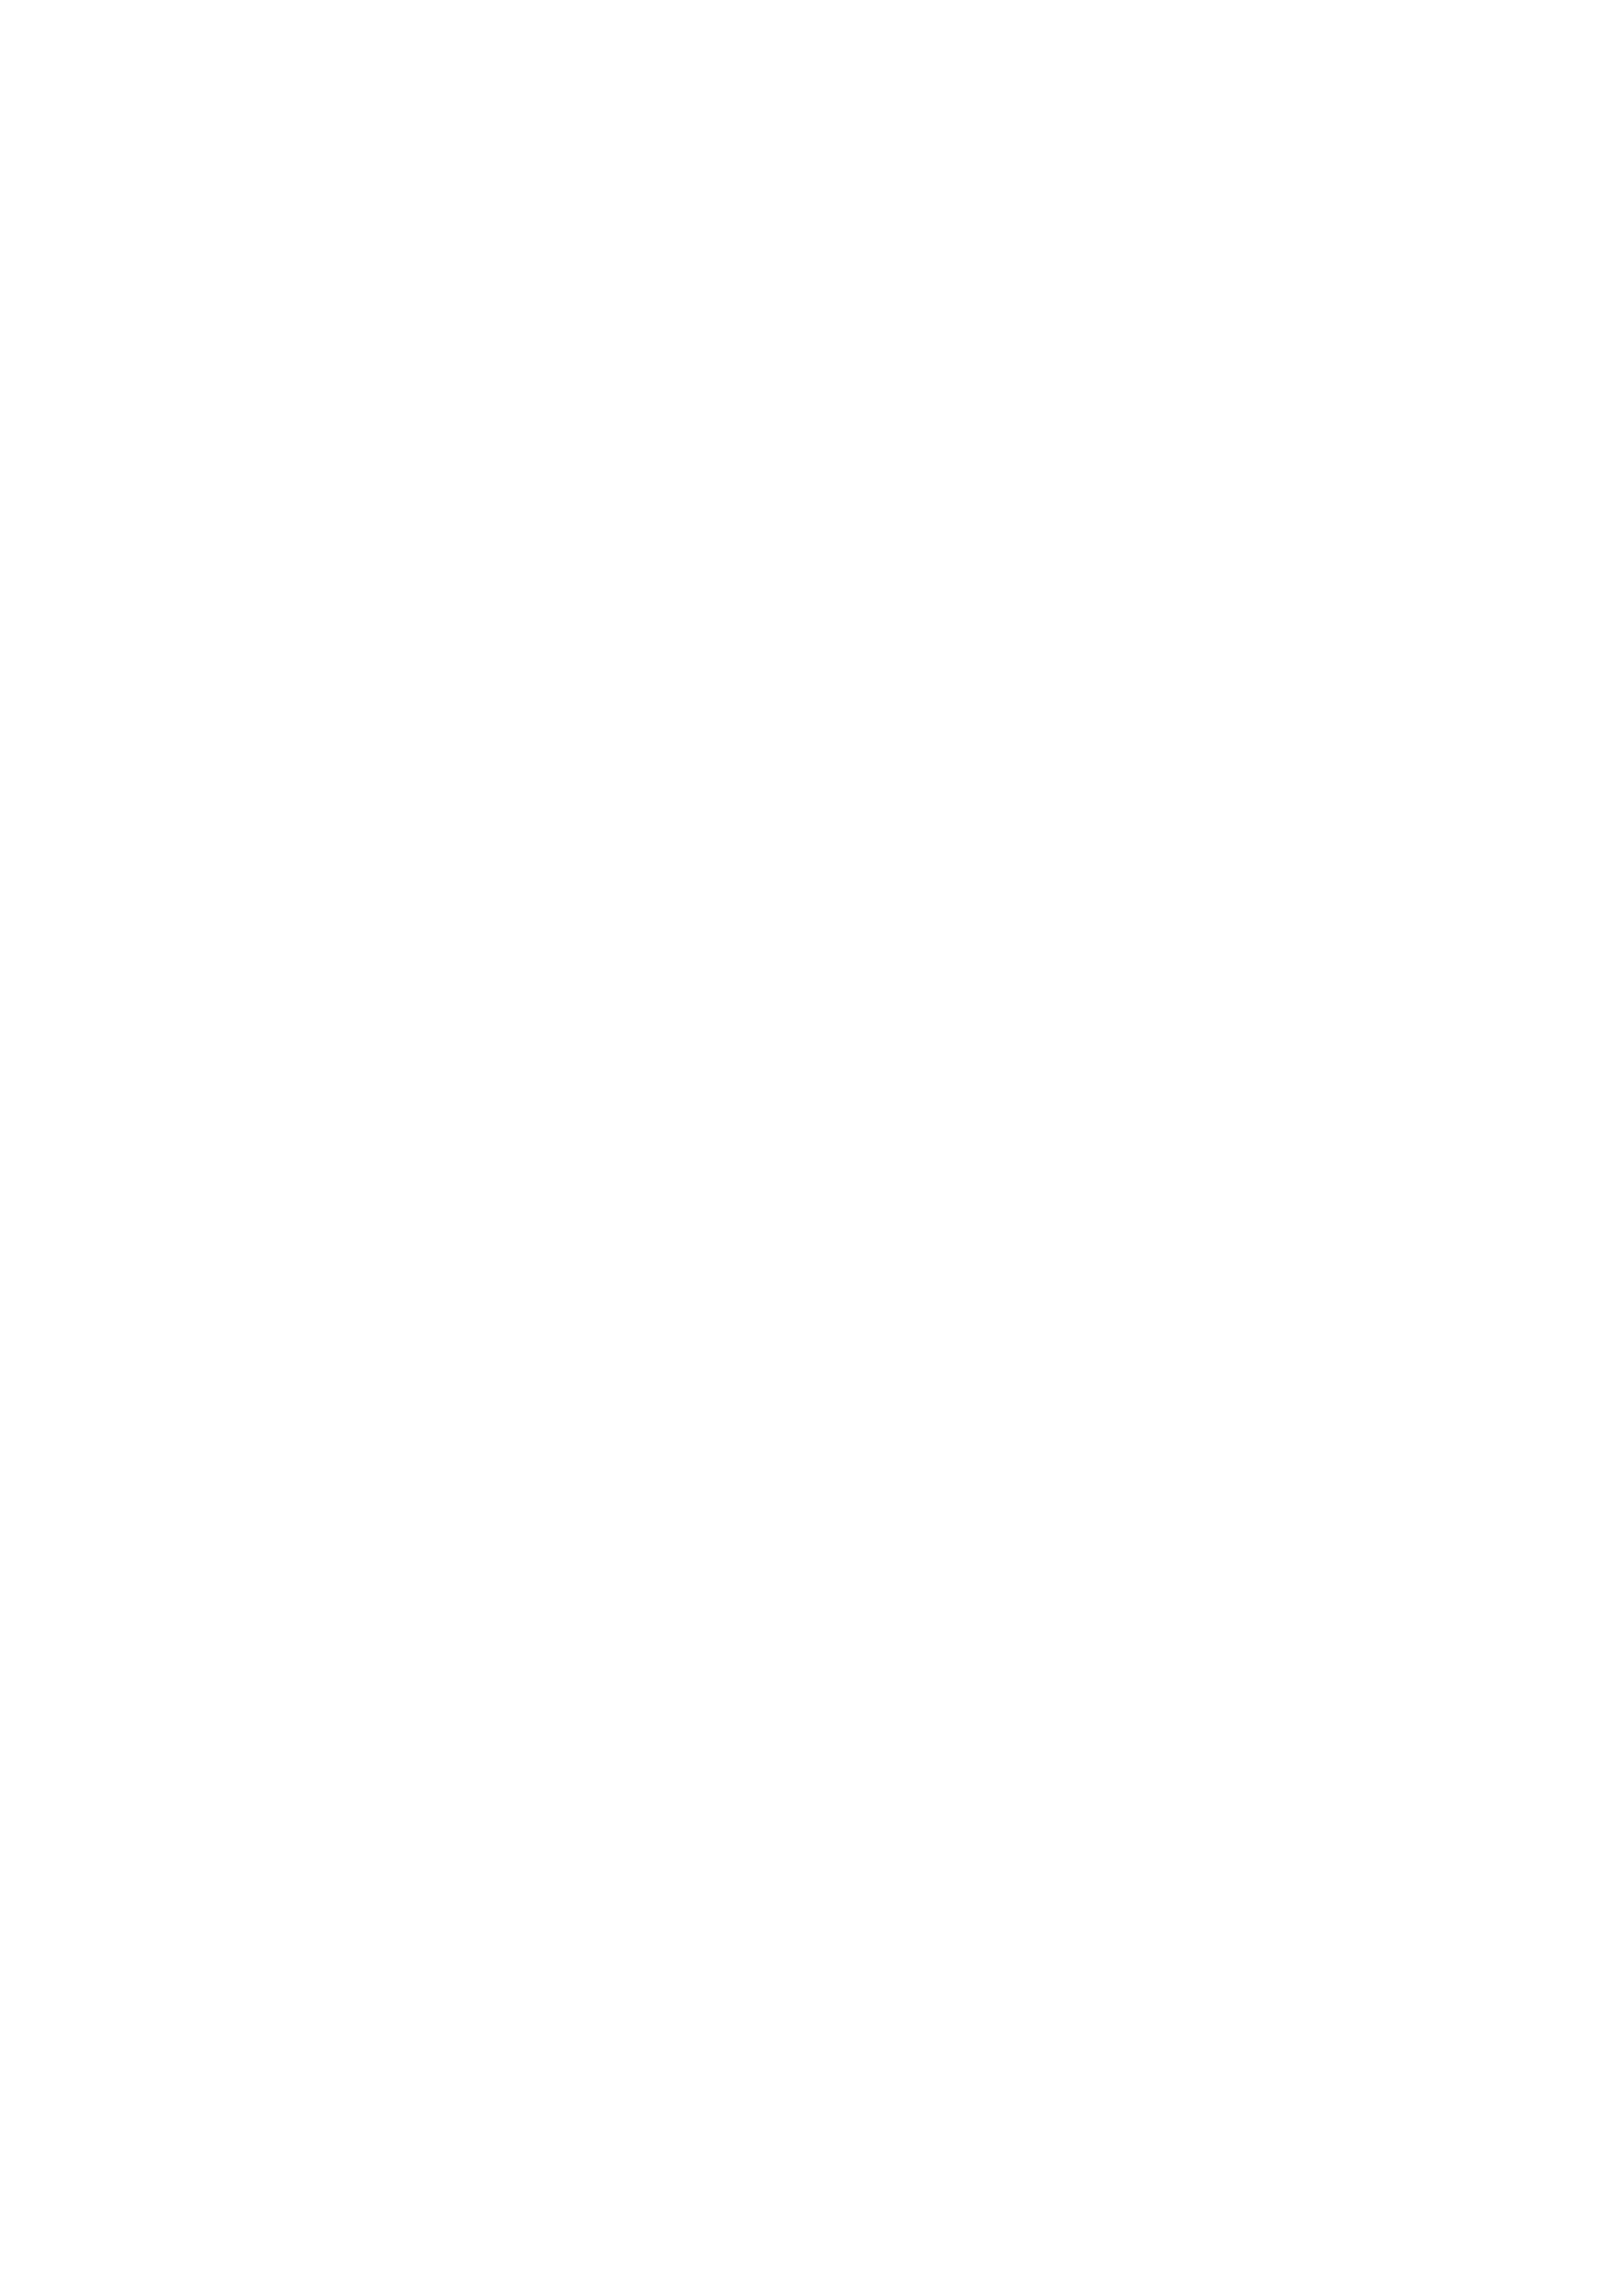 Kenzo Parfums